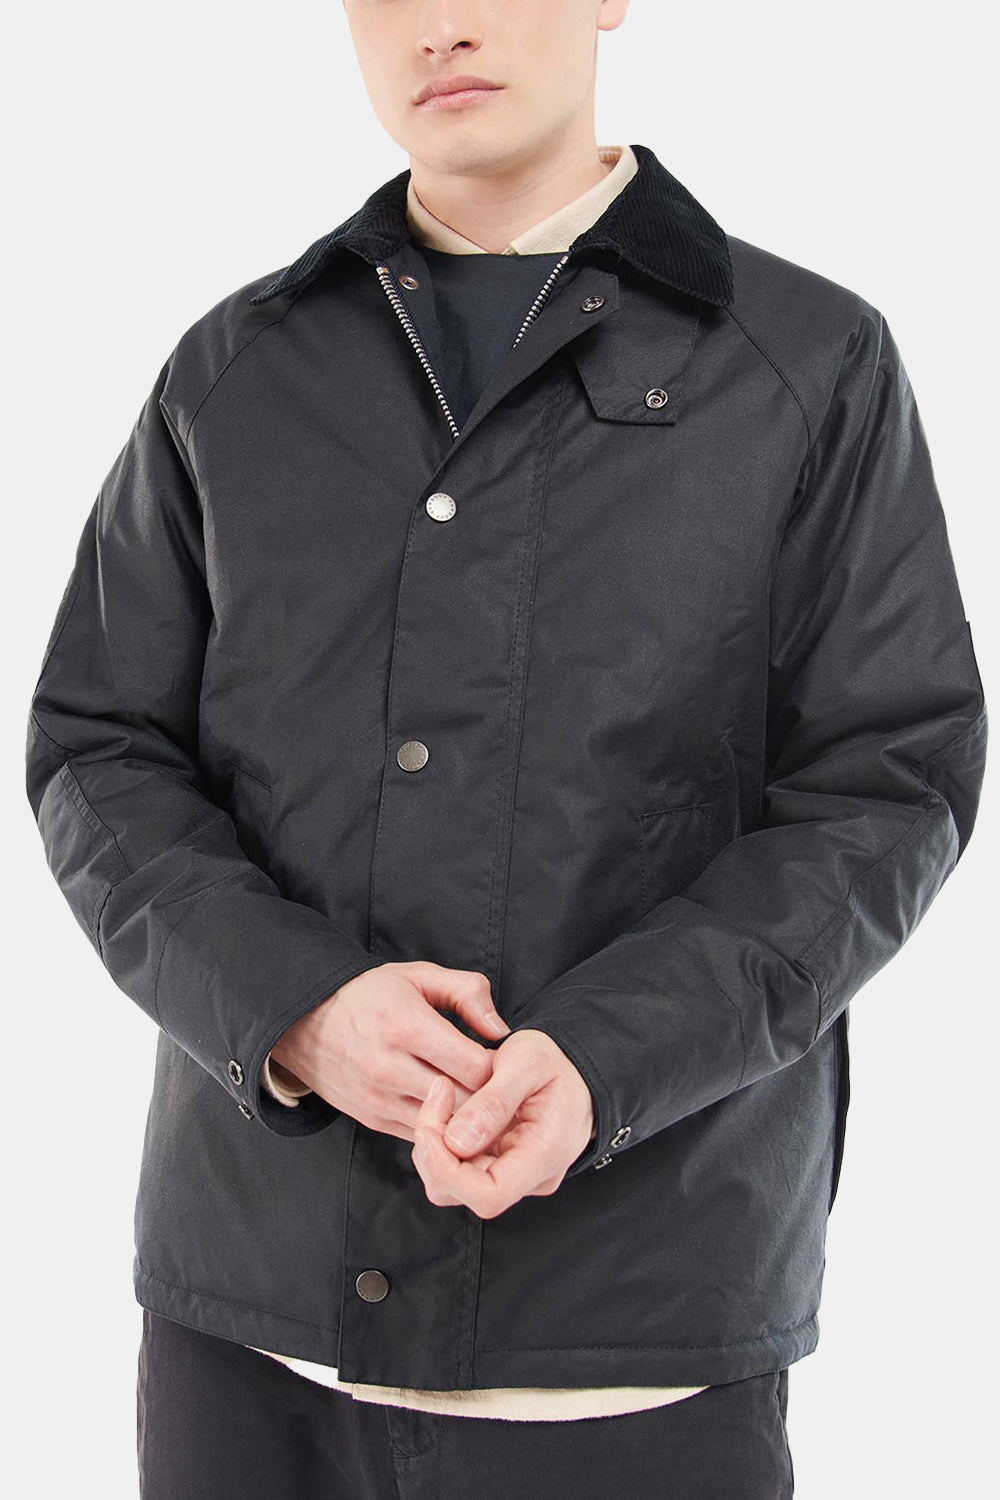 Barbour White Label SL Nara Wax Jacket (Navy) | Number Six